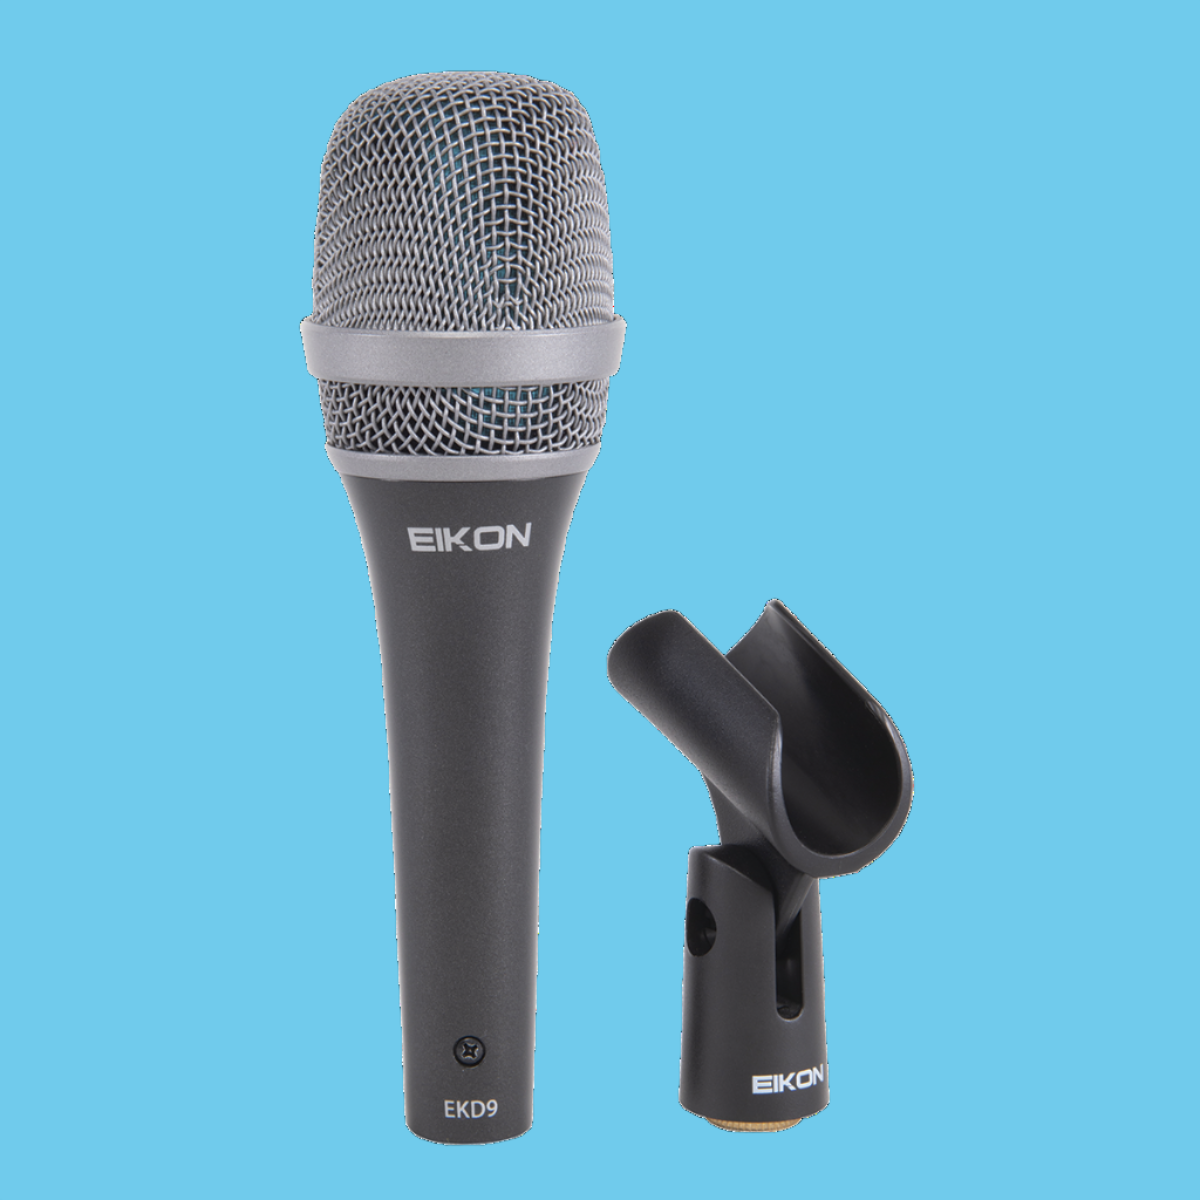 Eikon EKD9 Handheld Vocal Microphone with Bag & Clip